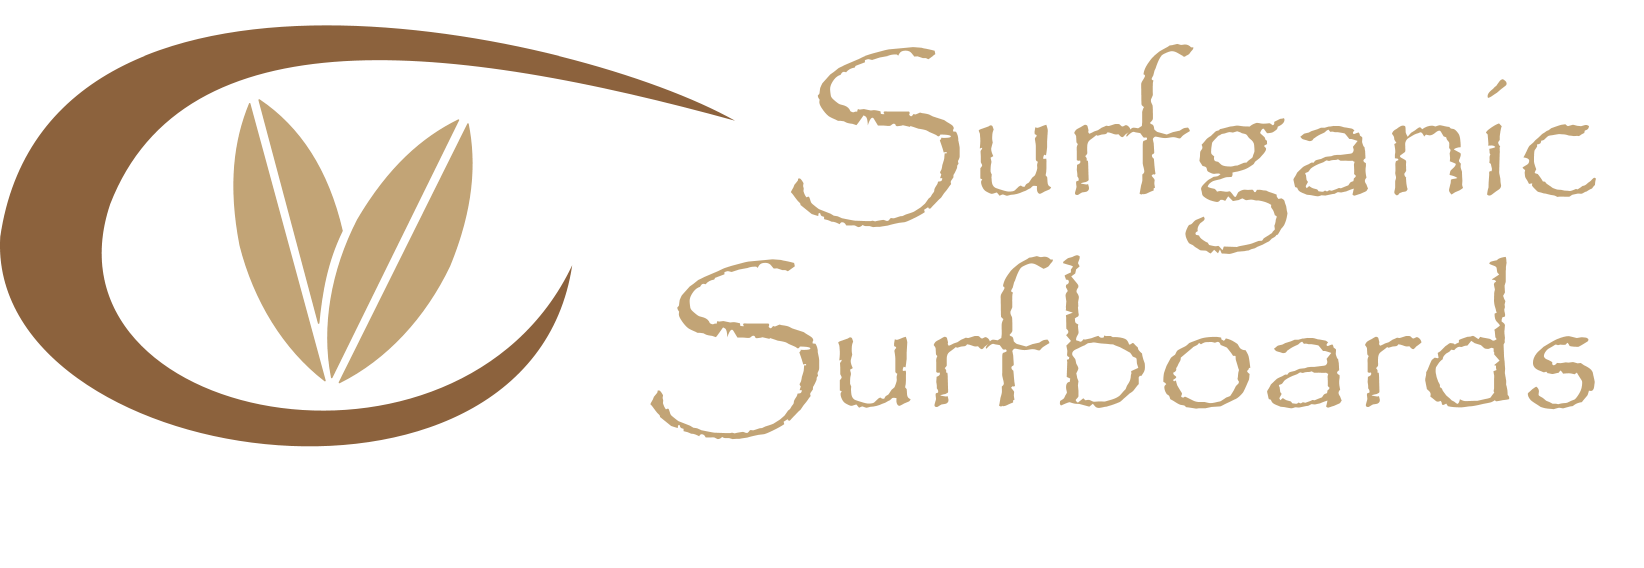 (c) Surfganic-surfboards.com